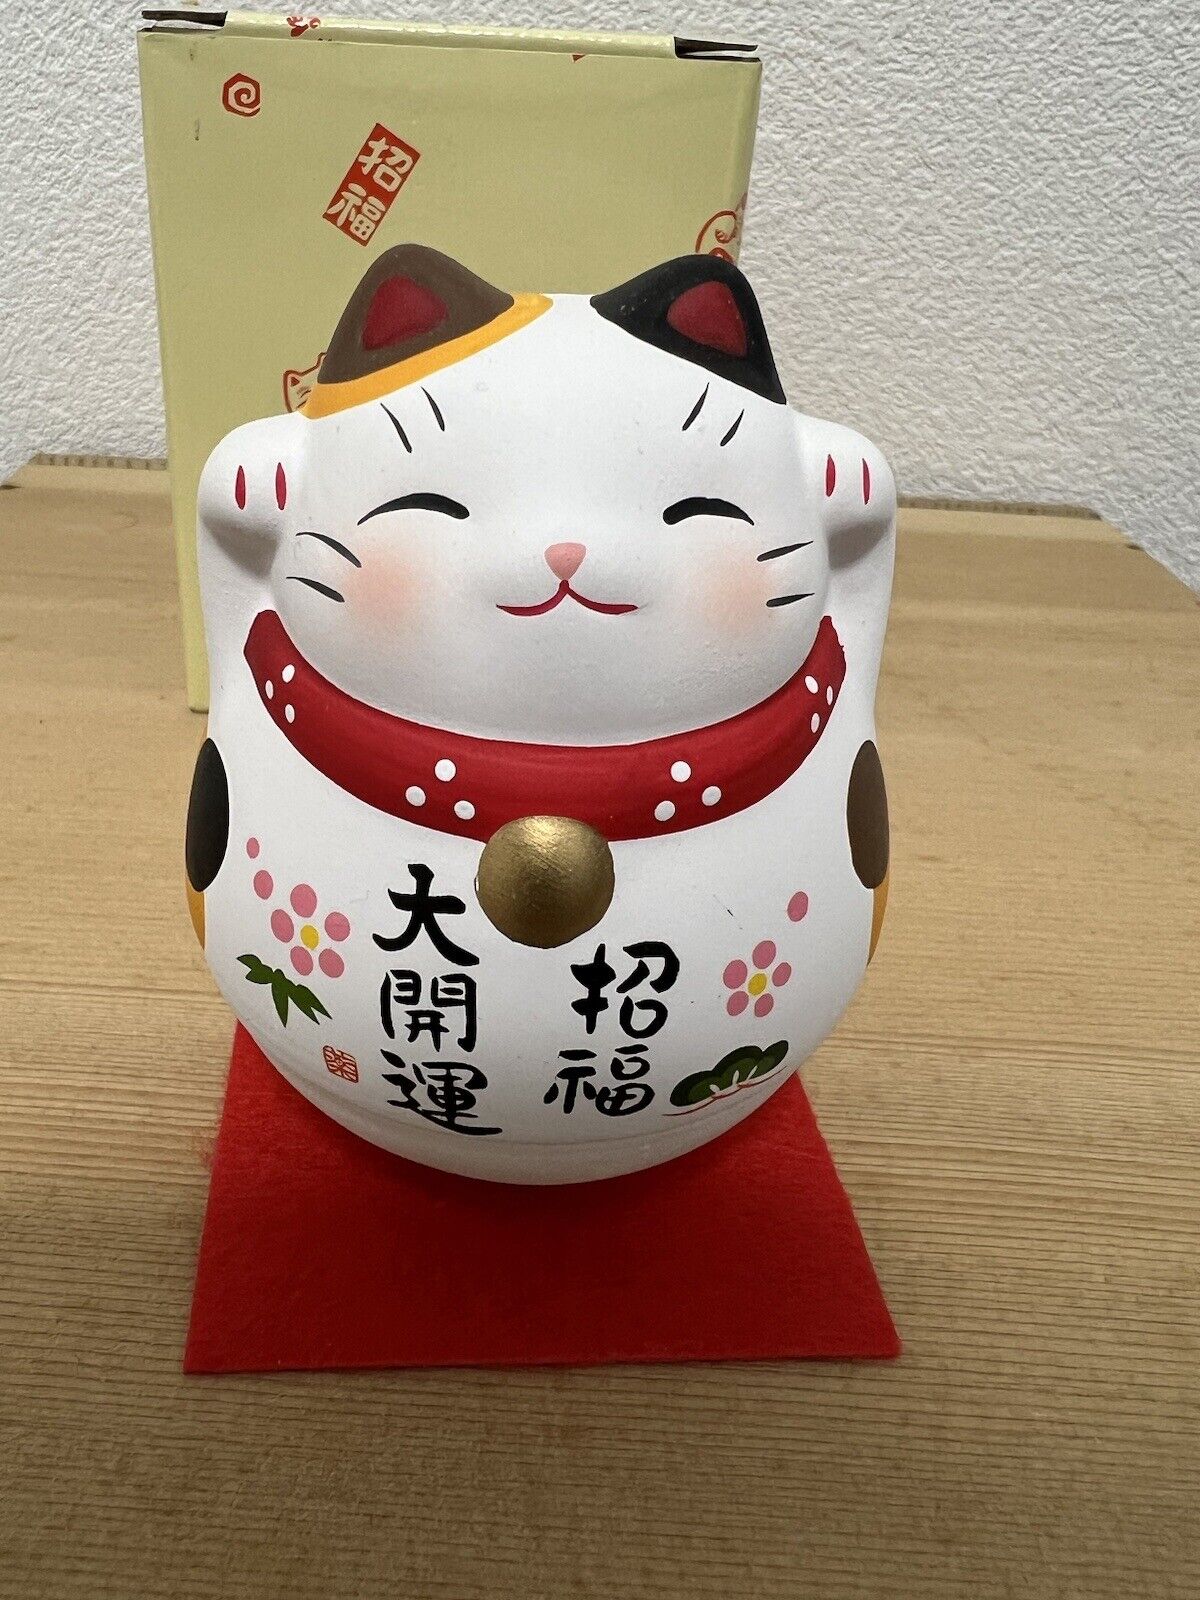 Vintage Japan Ceramic Dai_kai_un (big luck) Maneki Neko